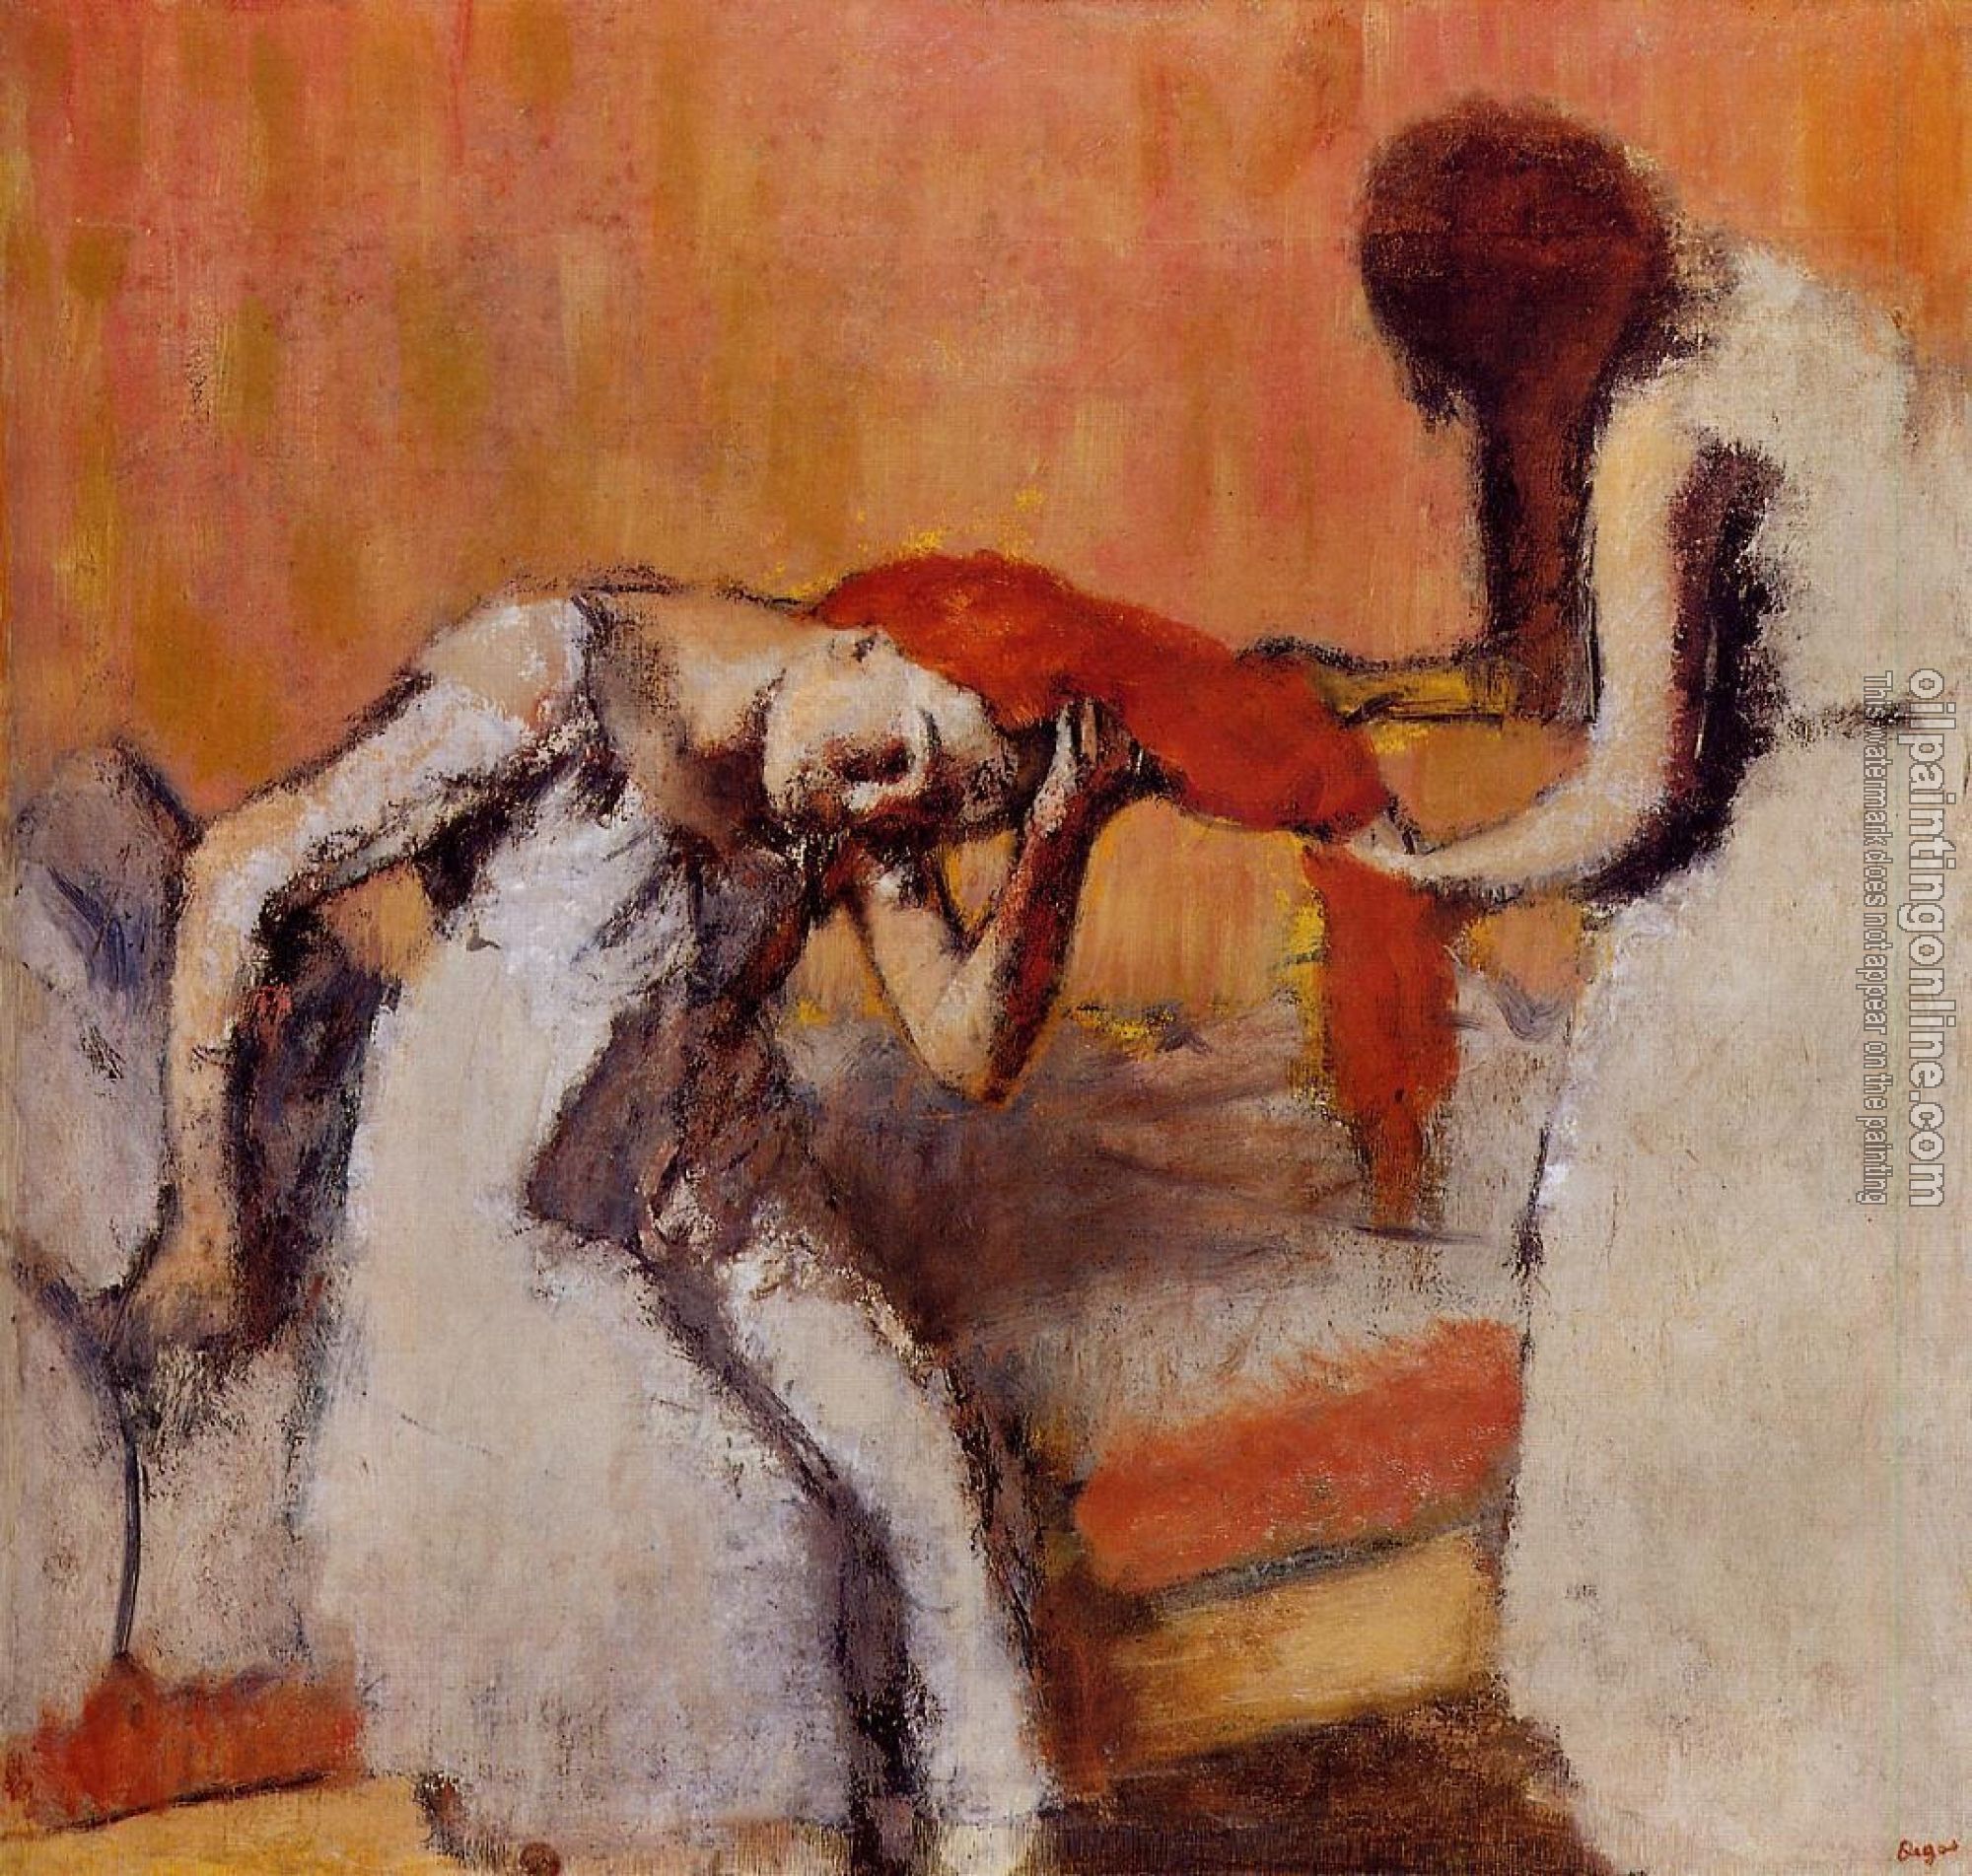 Degas, Edgar - Combing the Hair